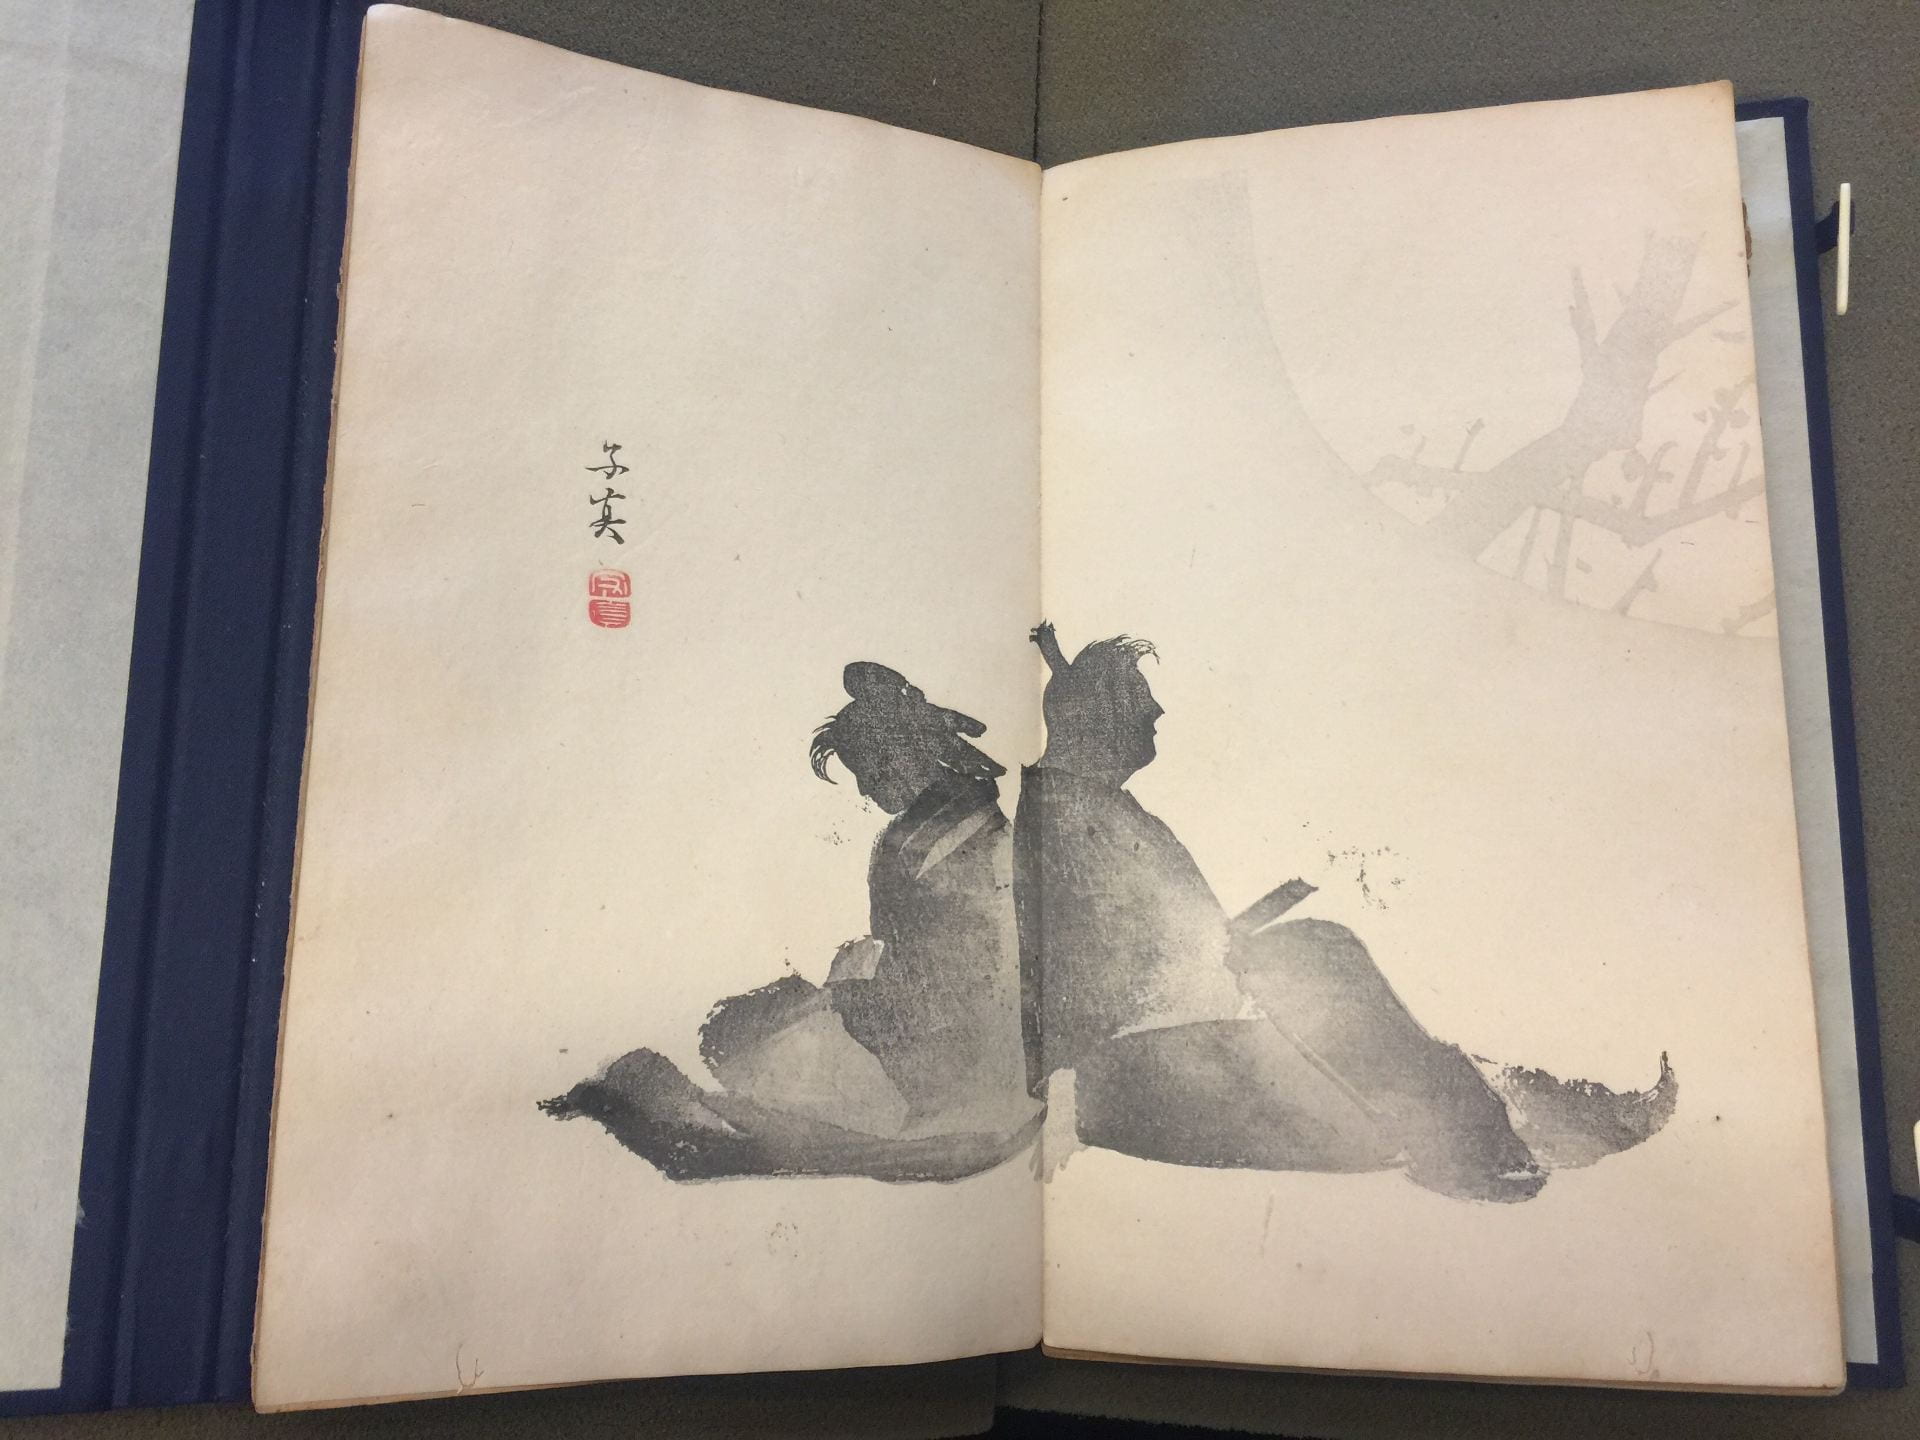 MORI TETSUZAN 森徹山 ET AL., KAGETSUJŌ / 華月帖, 1836